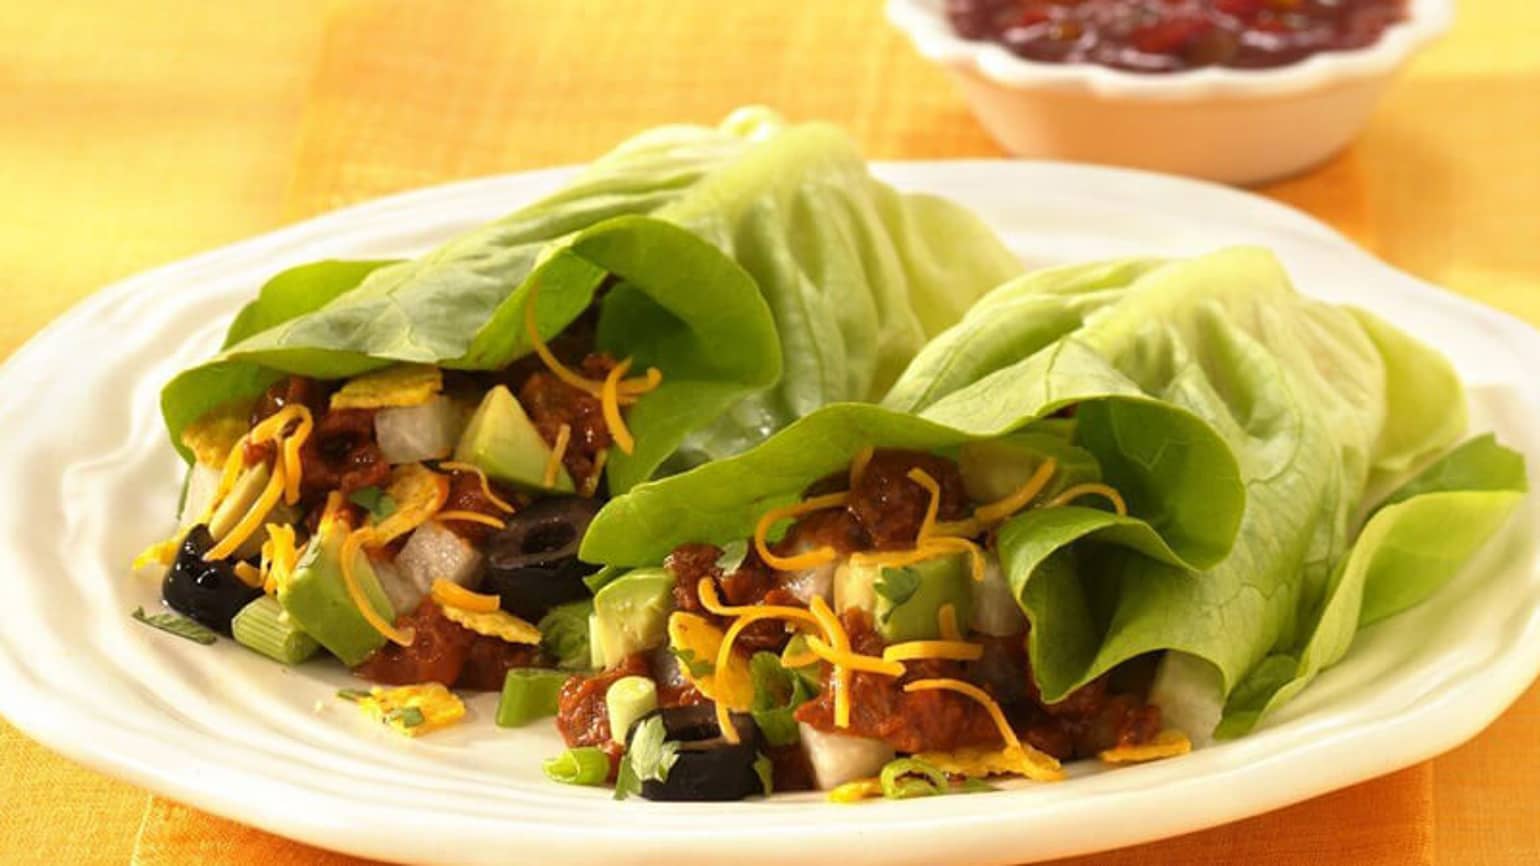 Inside-Out Taco Salad Wraps